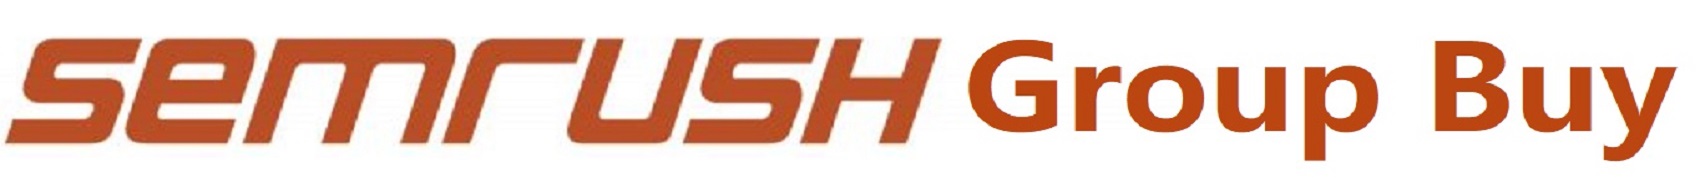 SEMrush Group Buy SEO Tools